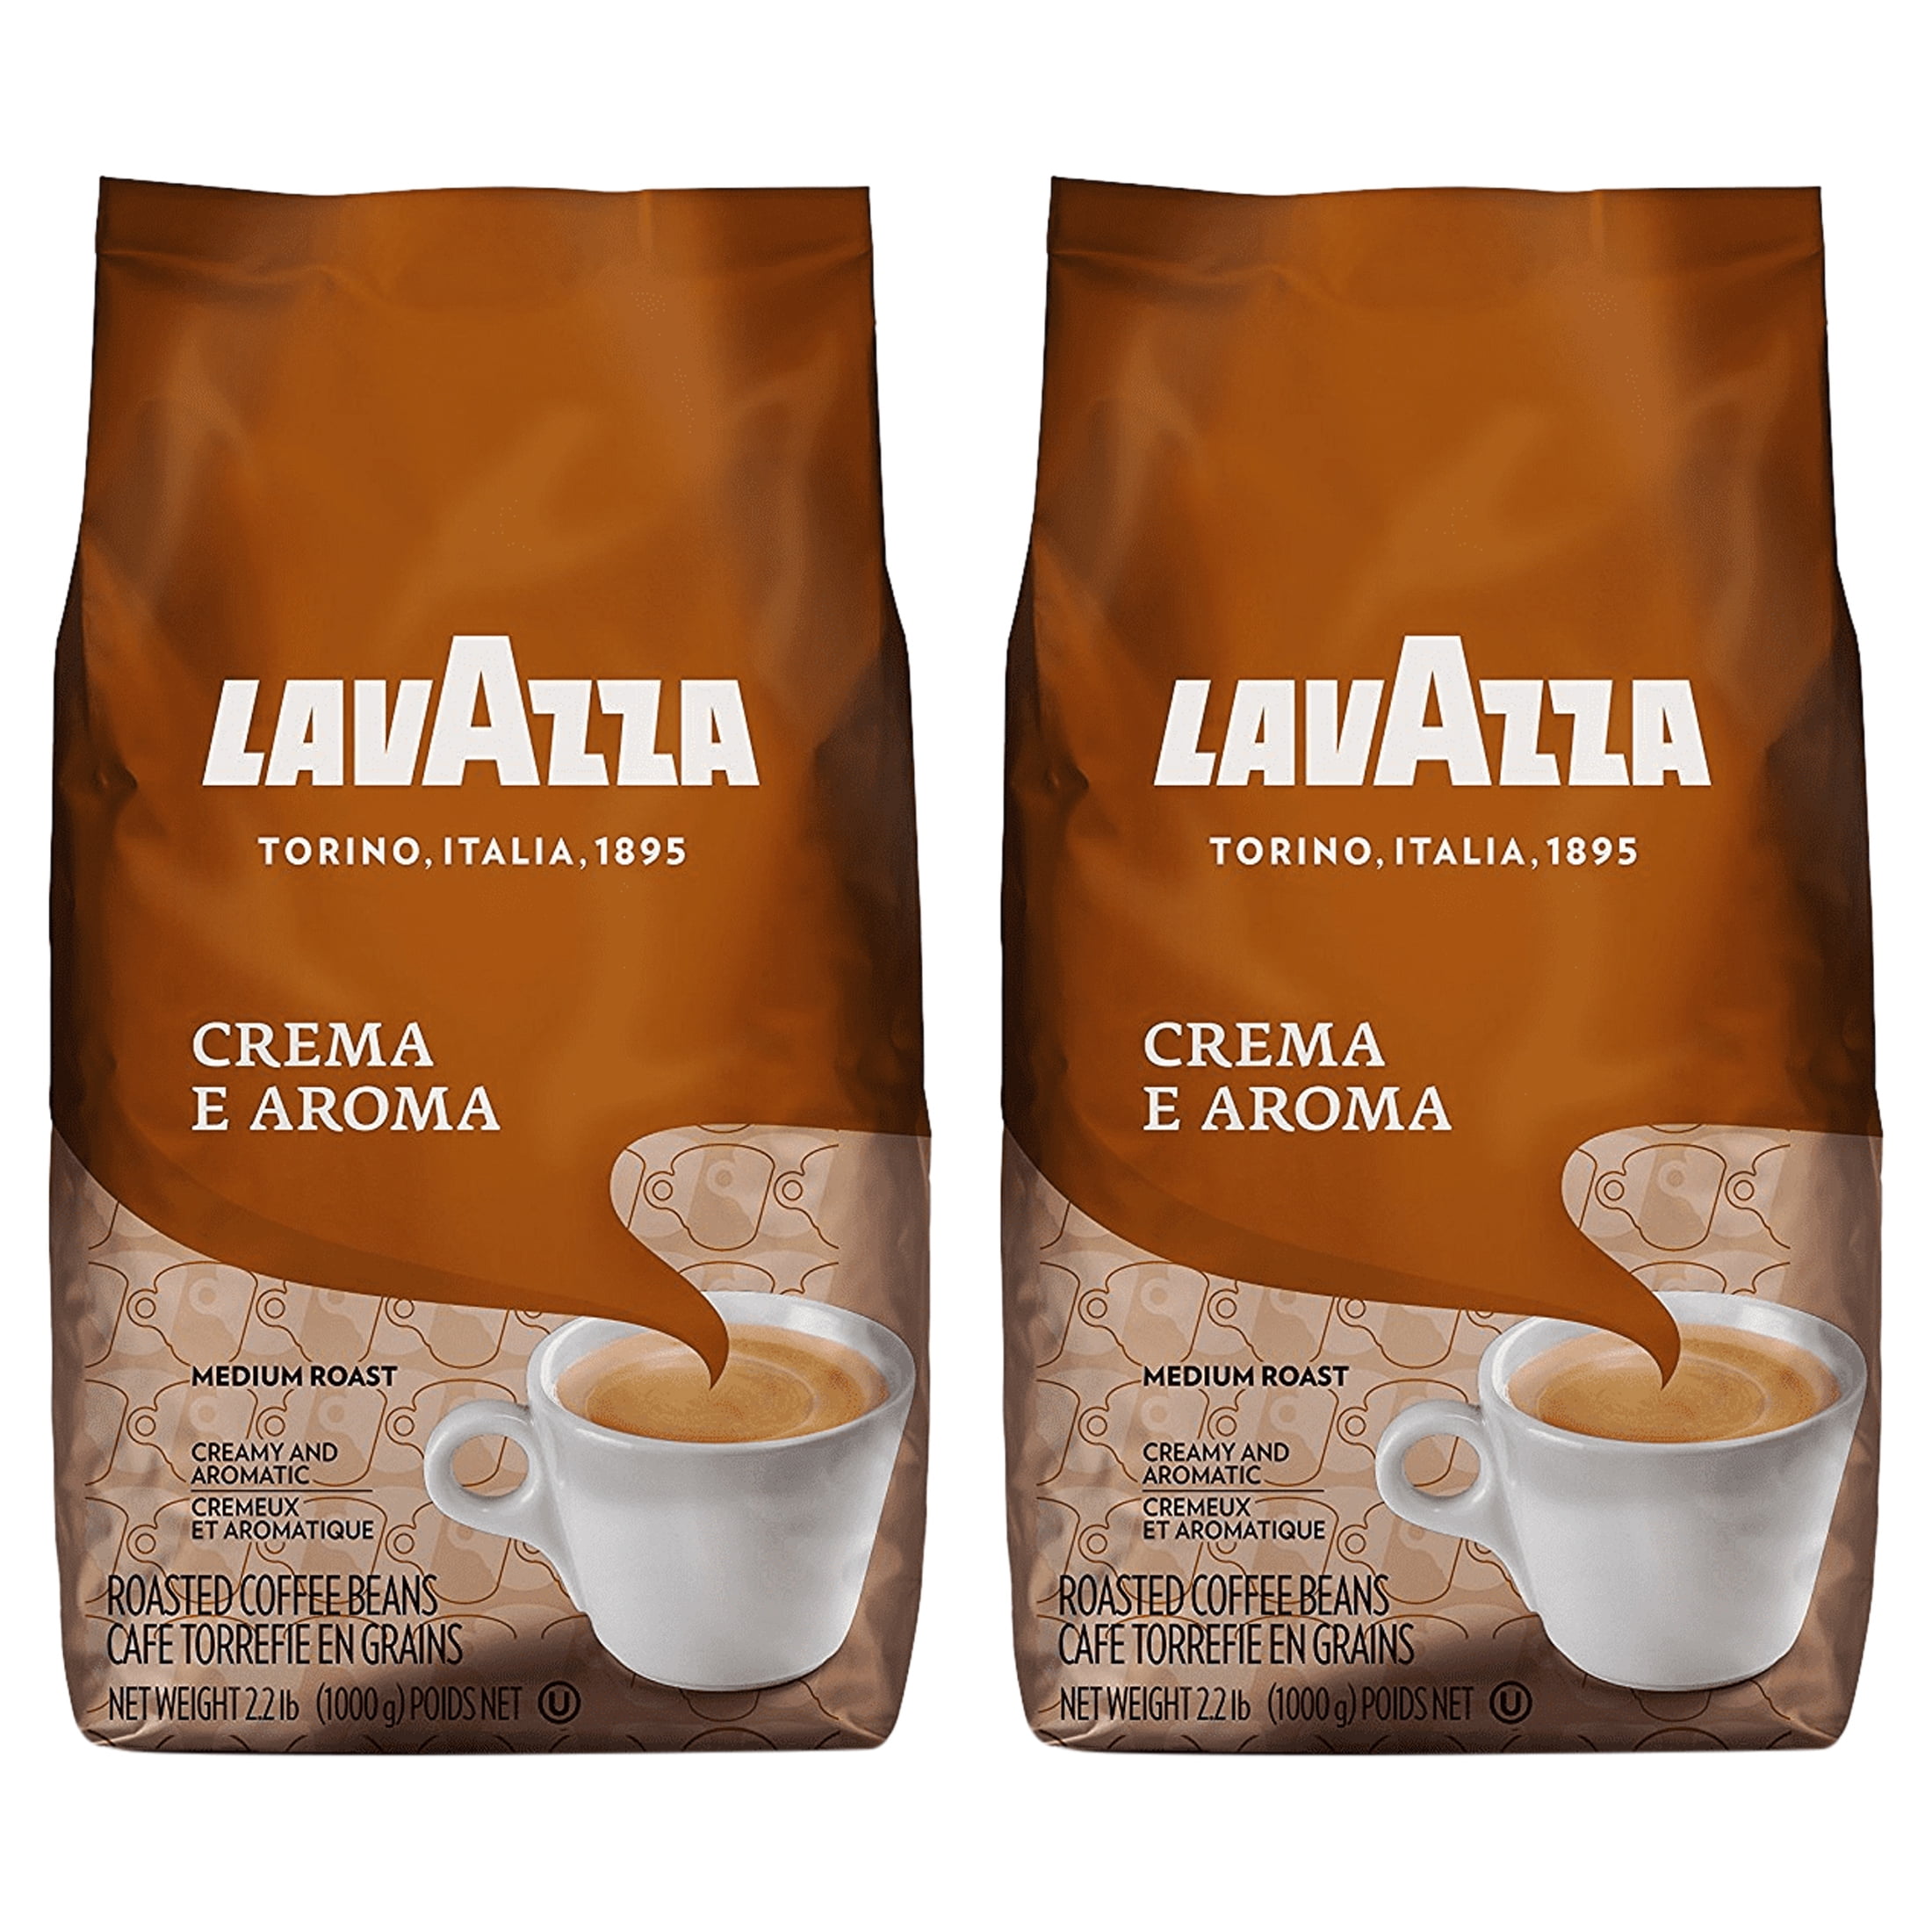 Lavazza Espresso Gran Crema Whole Bean Coffee, Medium Roast, 2.2 lbs